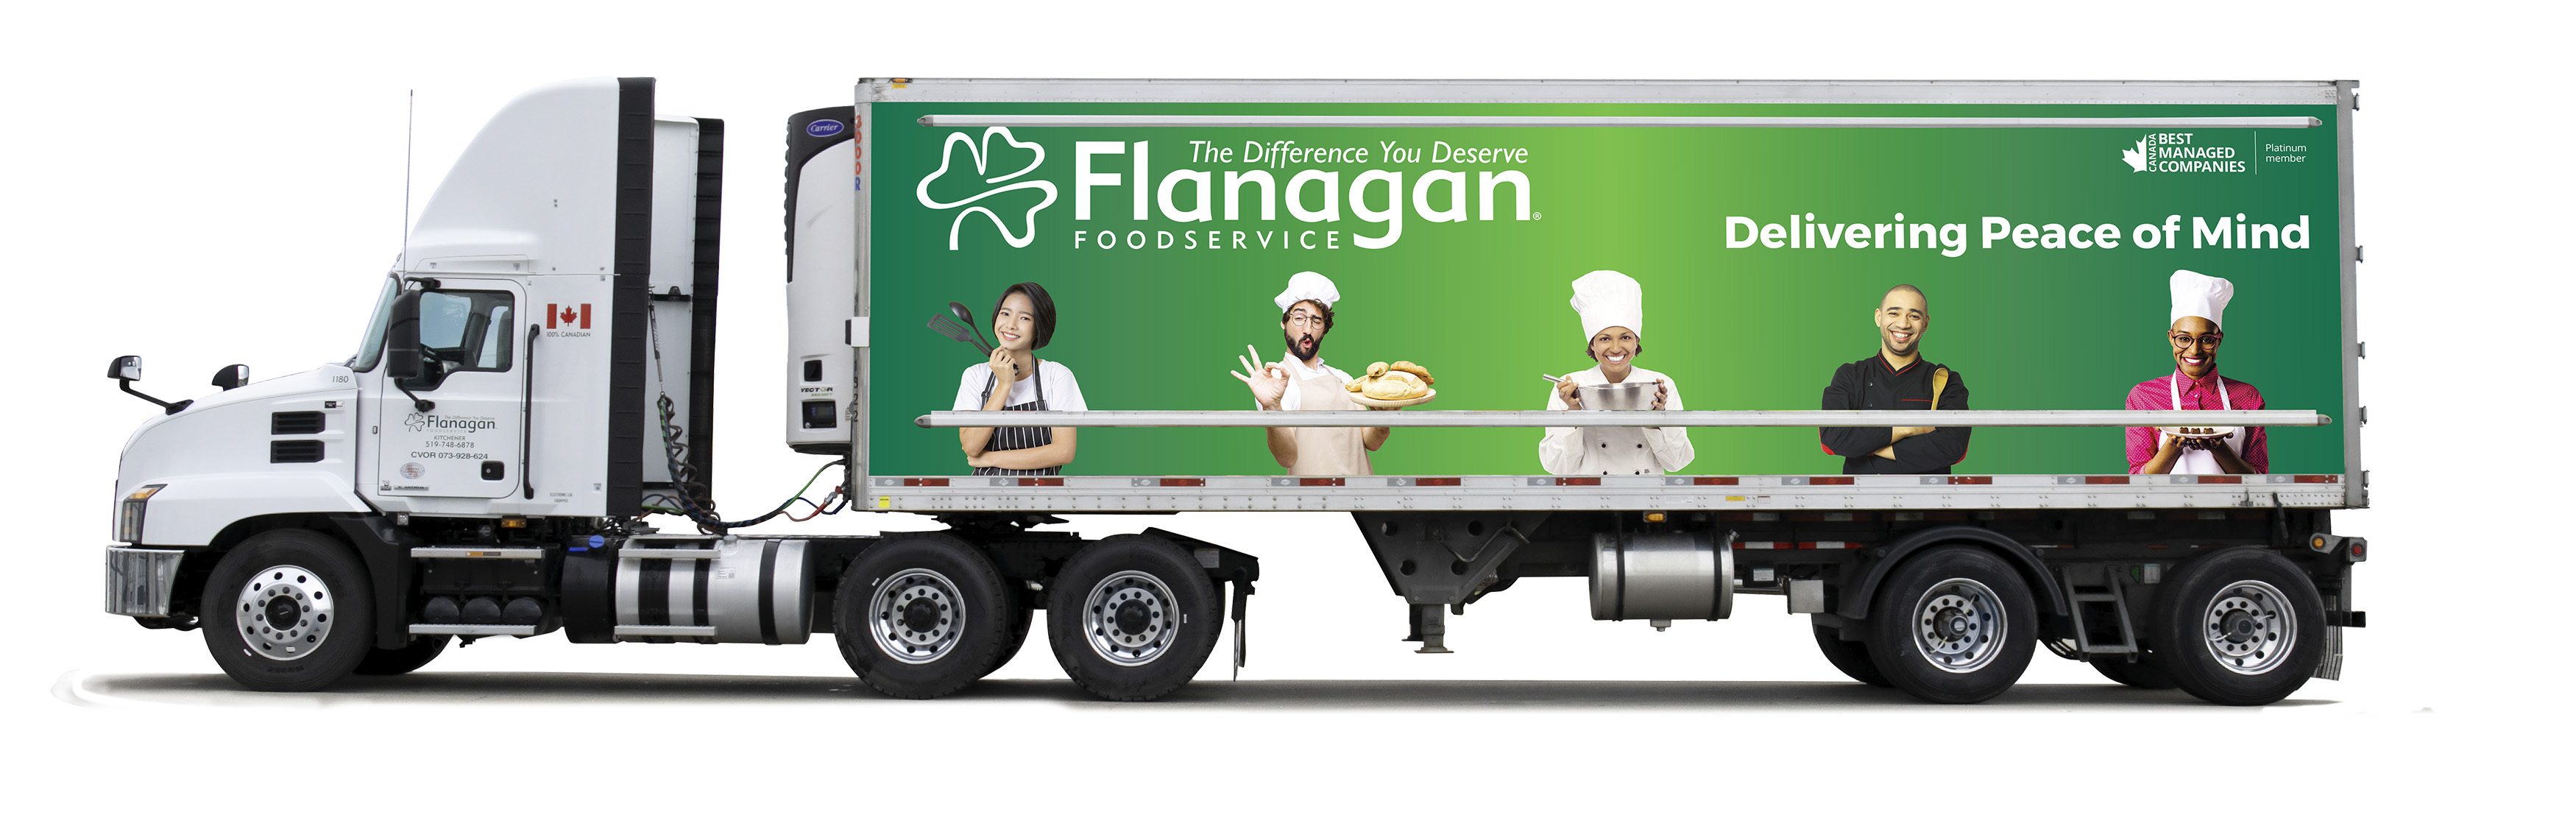 Flanagan Foodservice Truck